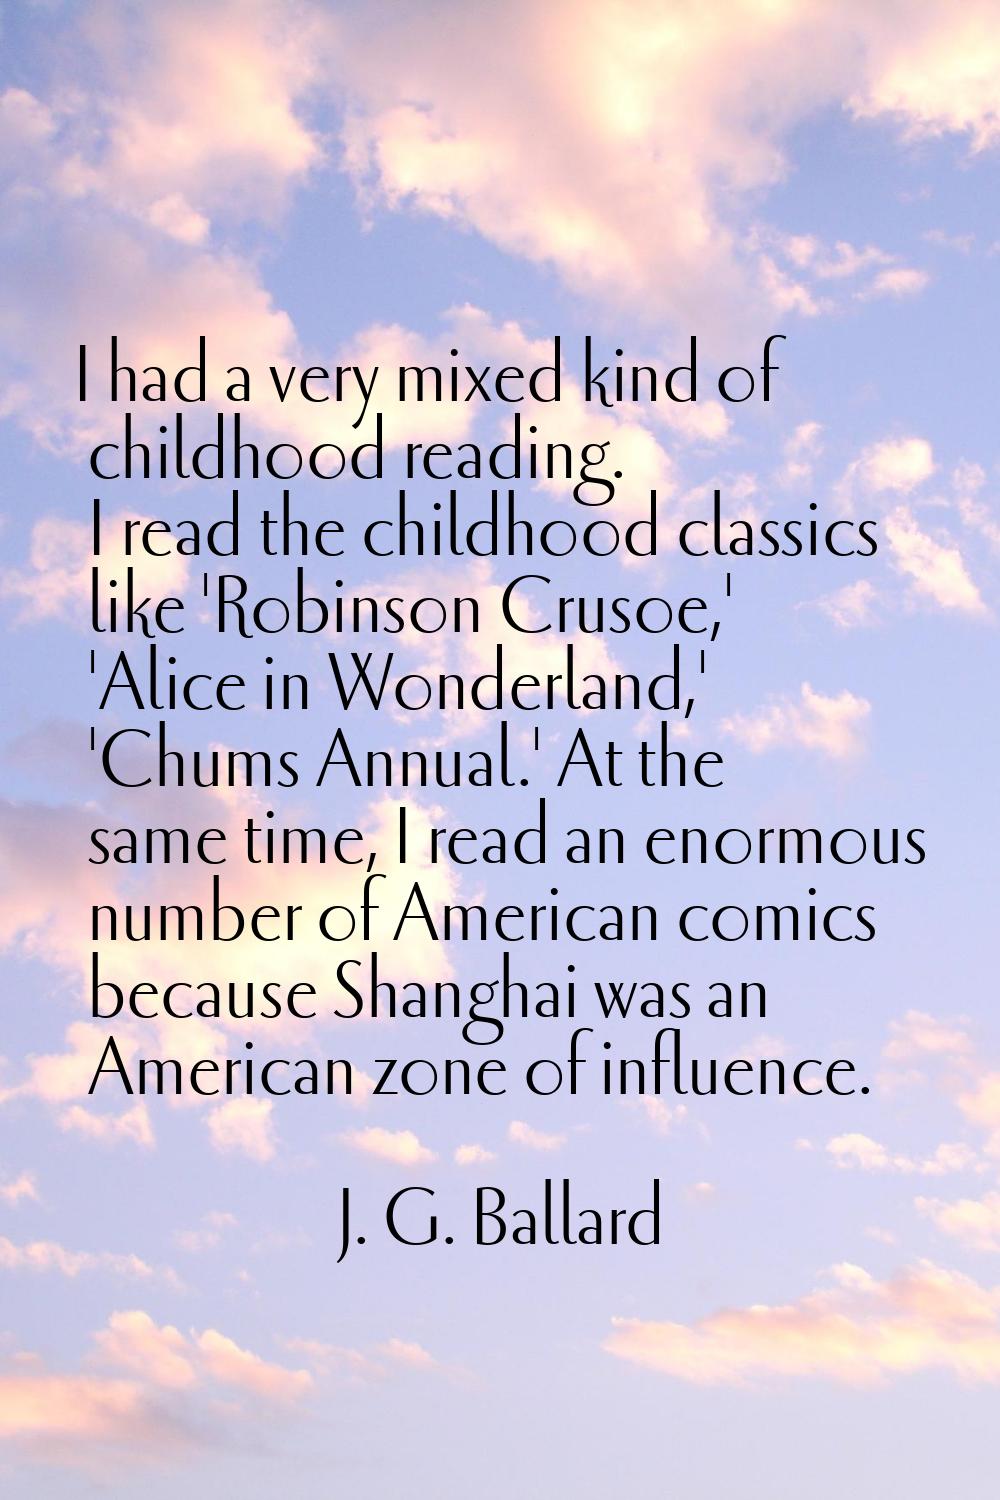 I had a very mixed kind of childhood reading. I read the childhood classics like 'Robinson Crusoe,'